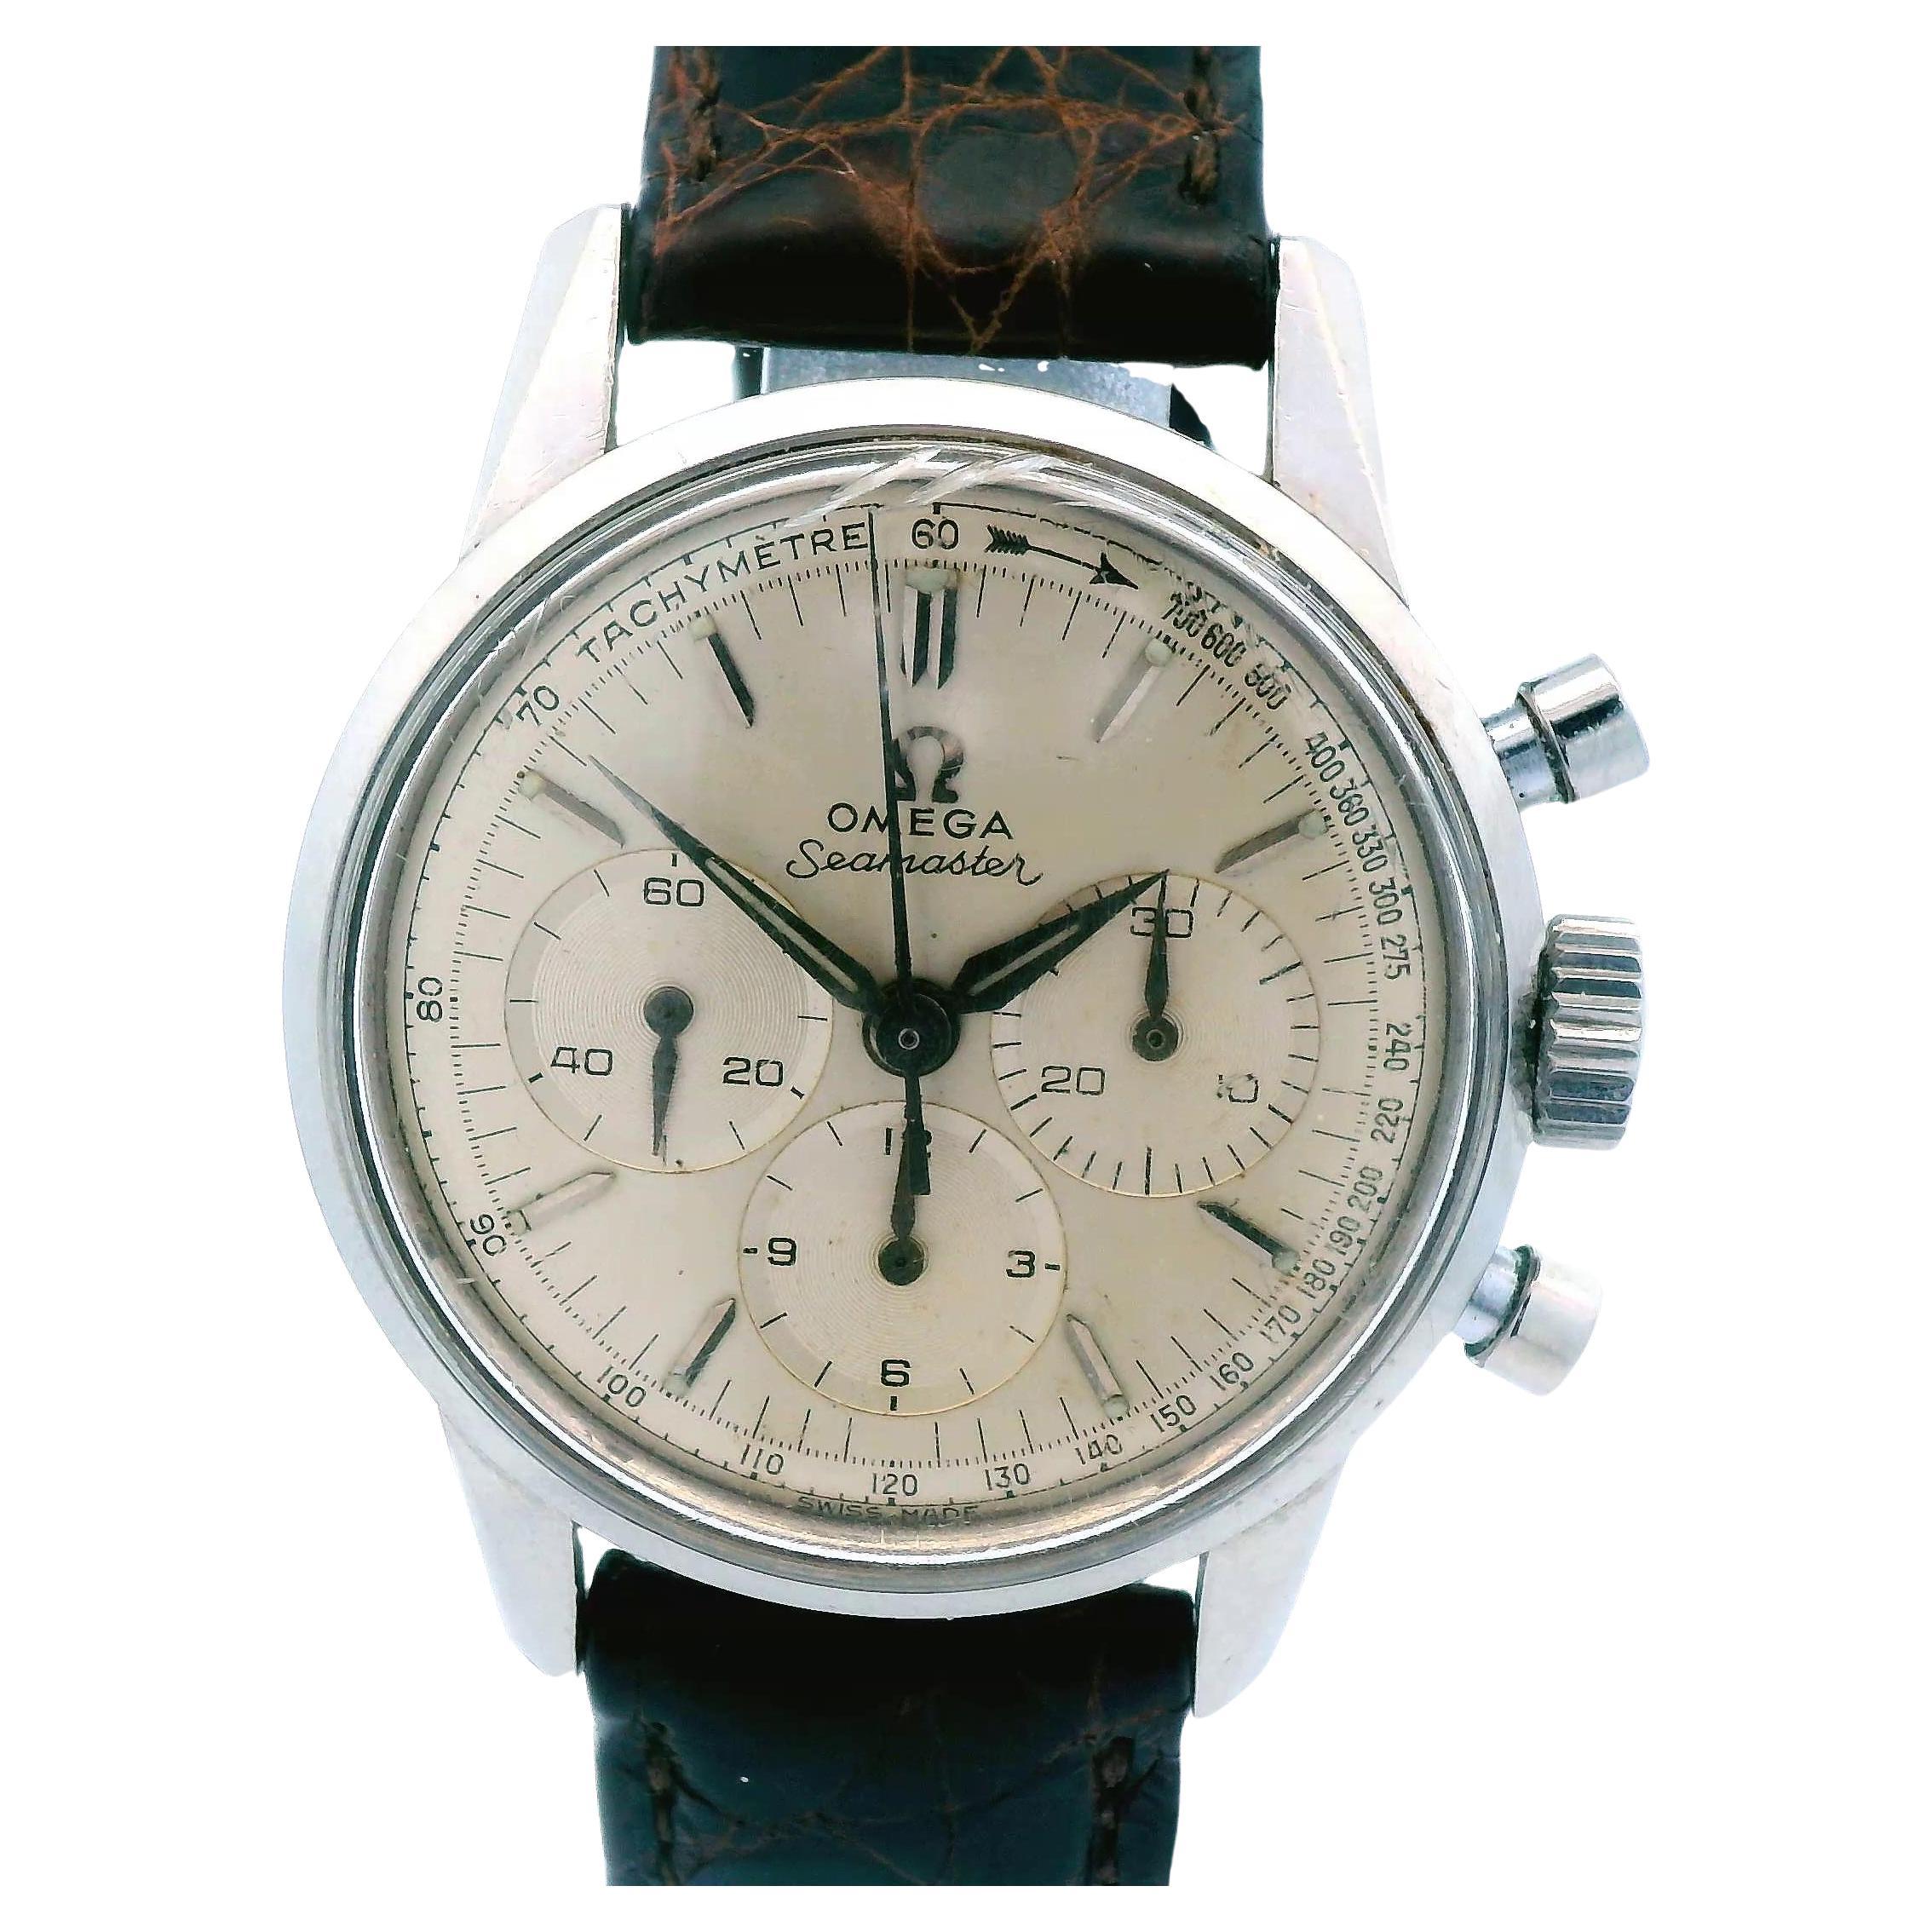 Omega Seamaster Montre chronographe en acier inoxydable des années 1960 - Running en vente